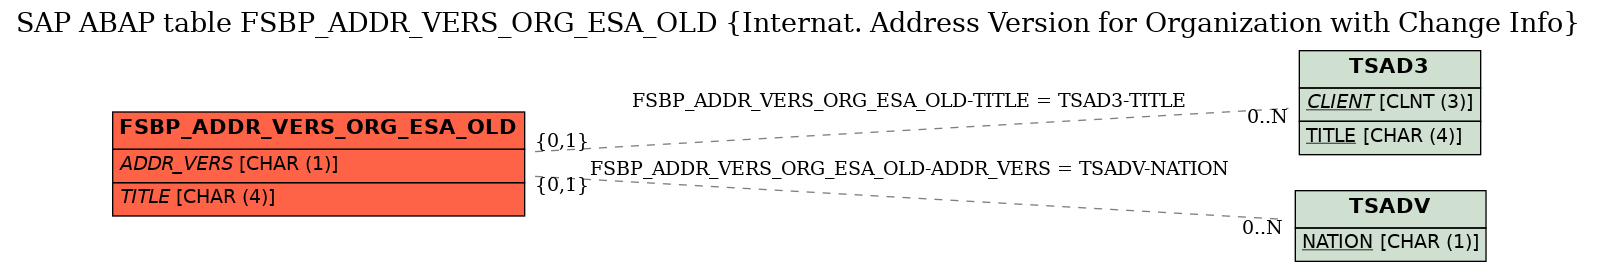 E-R Diagram for table FSBP_ADDR_VERS_ORG_ESA_OLD (Internat. Address Version for Organization with Change Info)